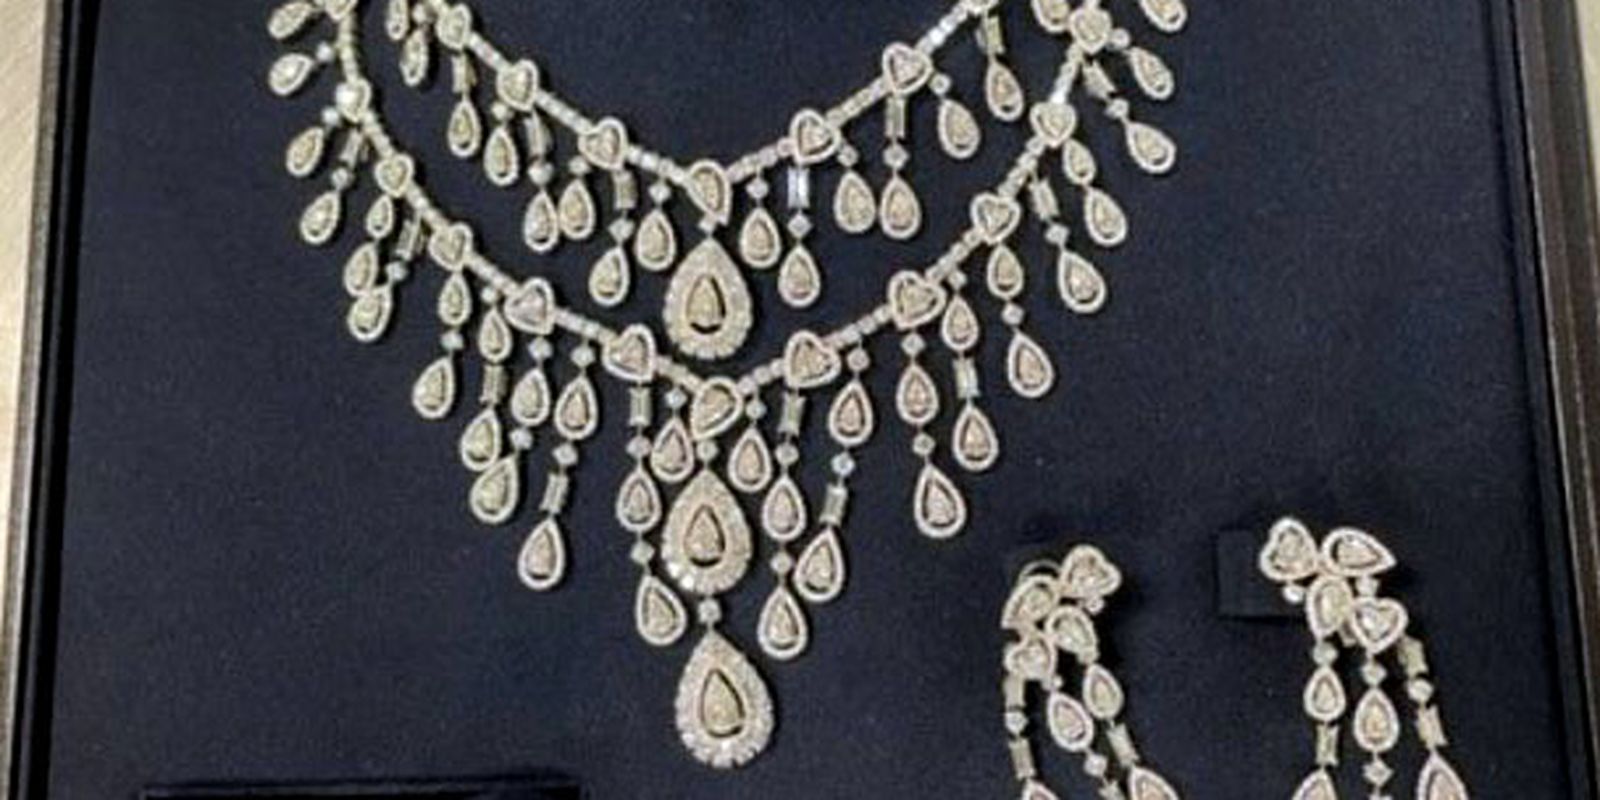 Policia Federal abre inquérito para investigar joias apreendidas